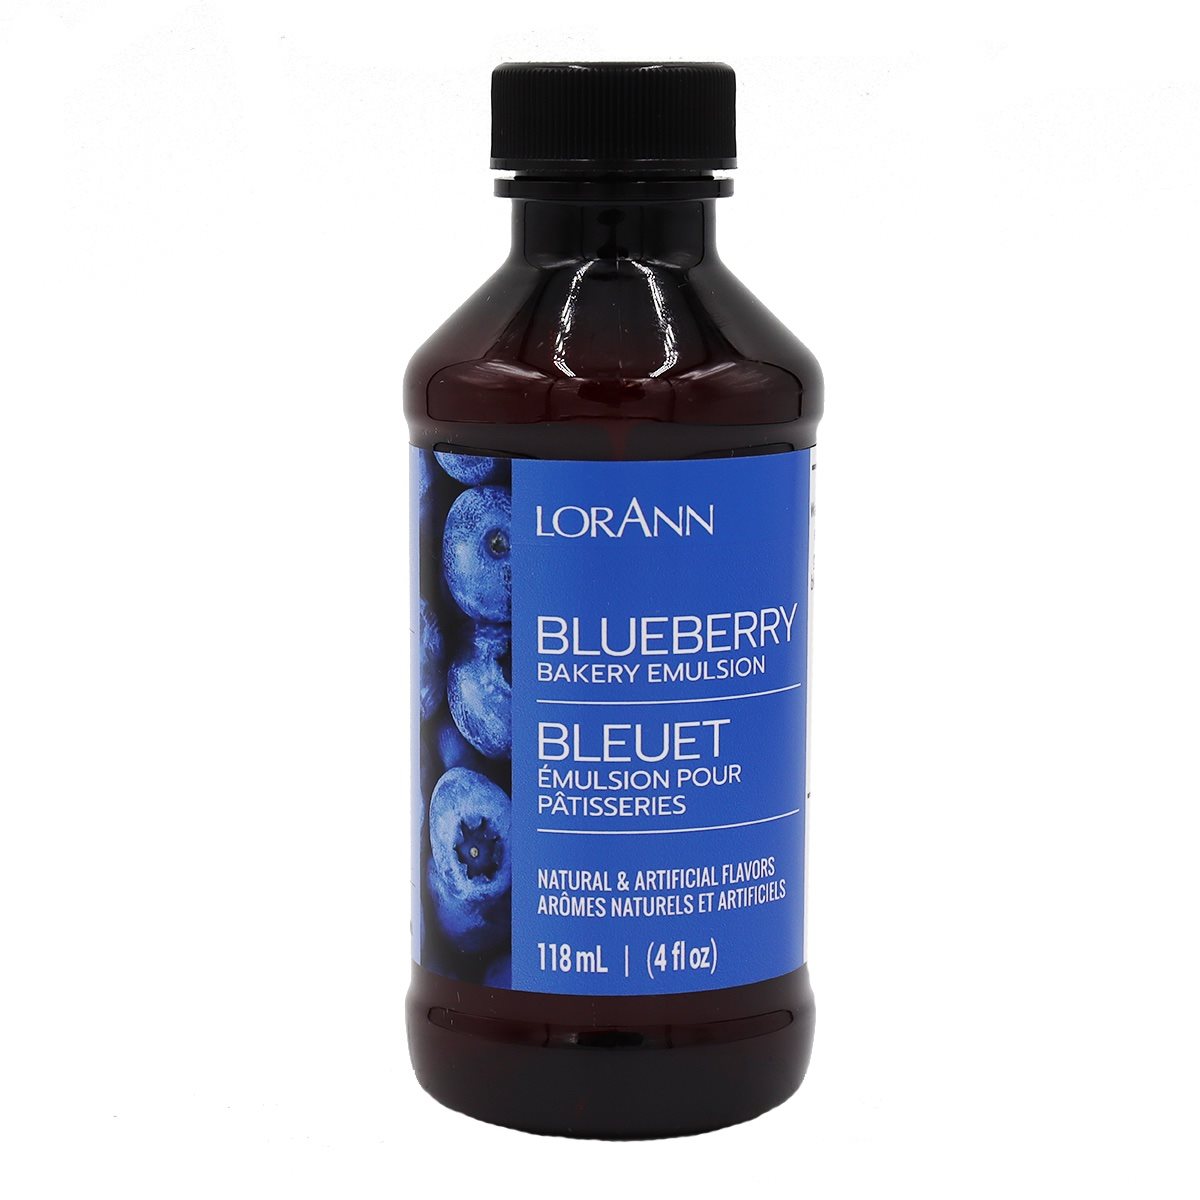 LorAnn Bakery Emulsion - Blueberry